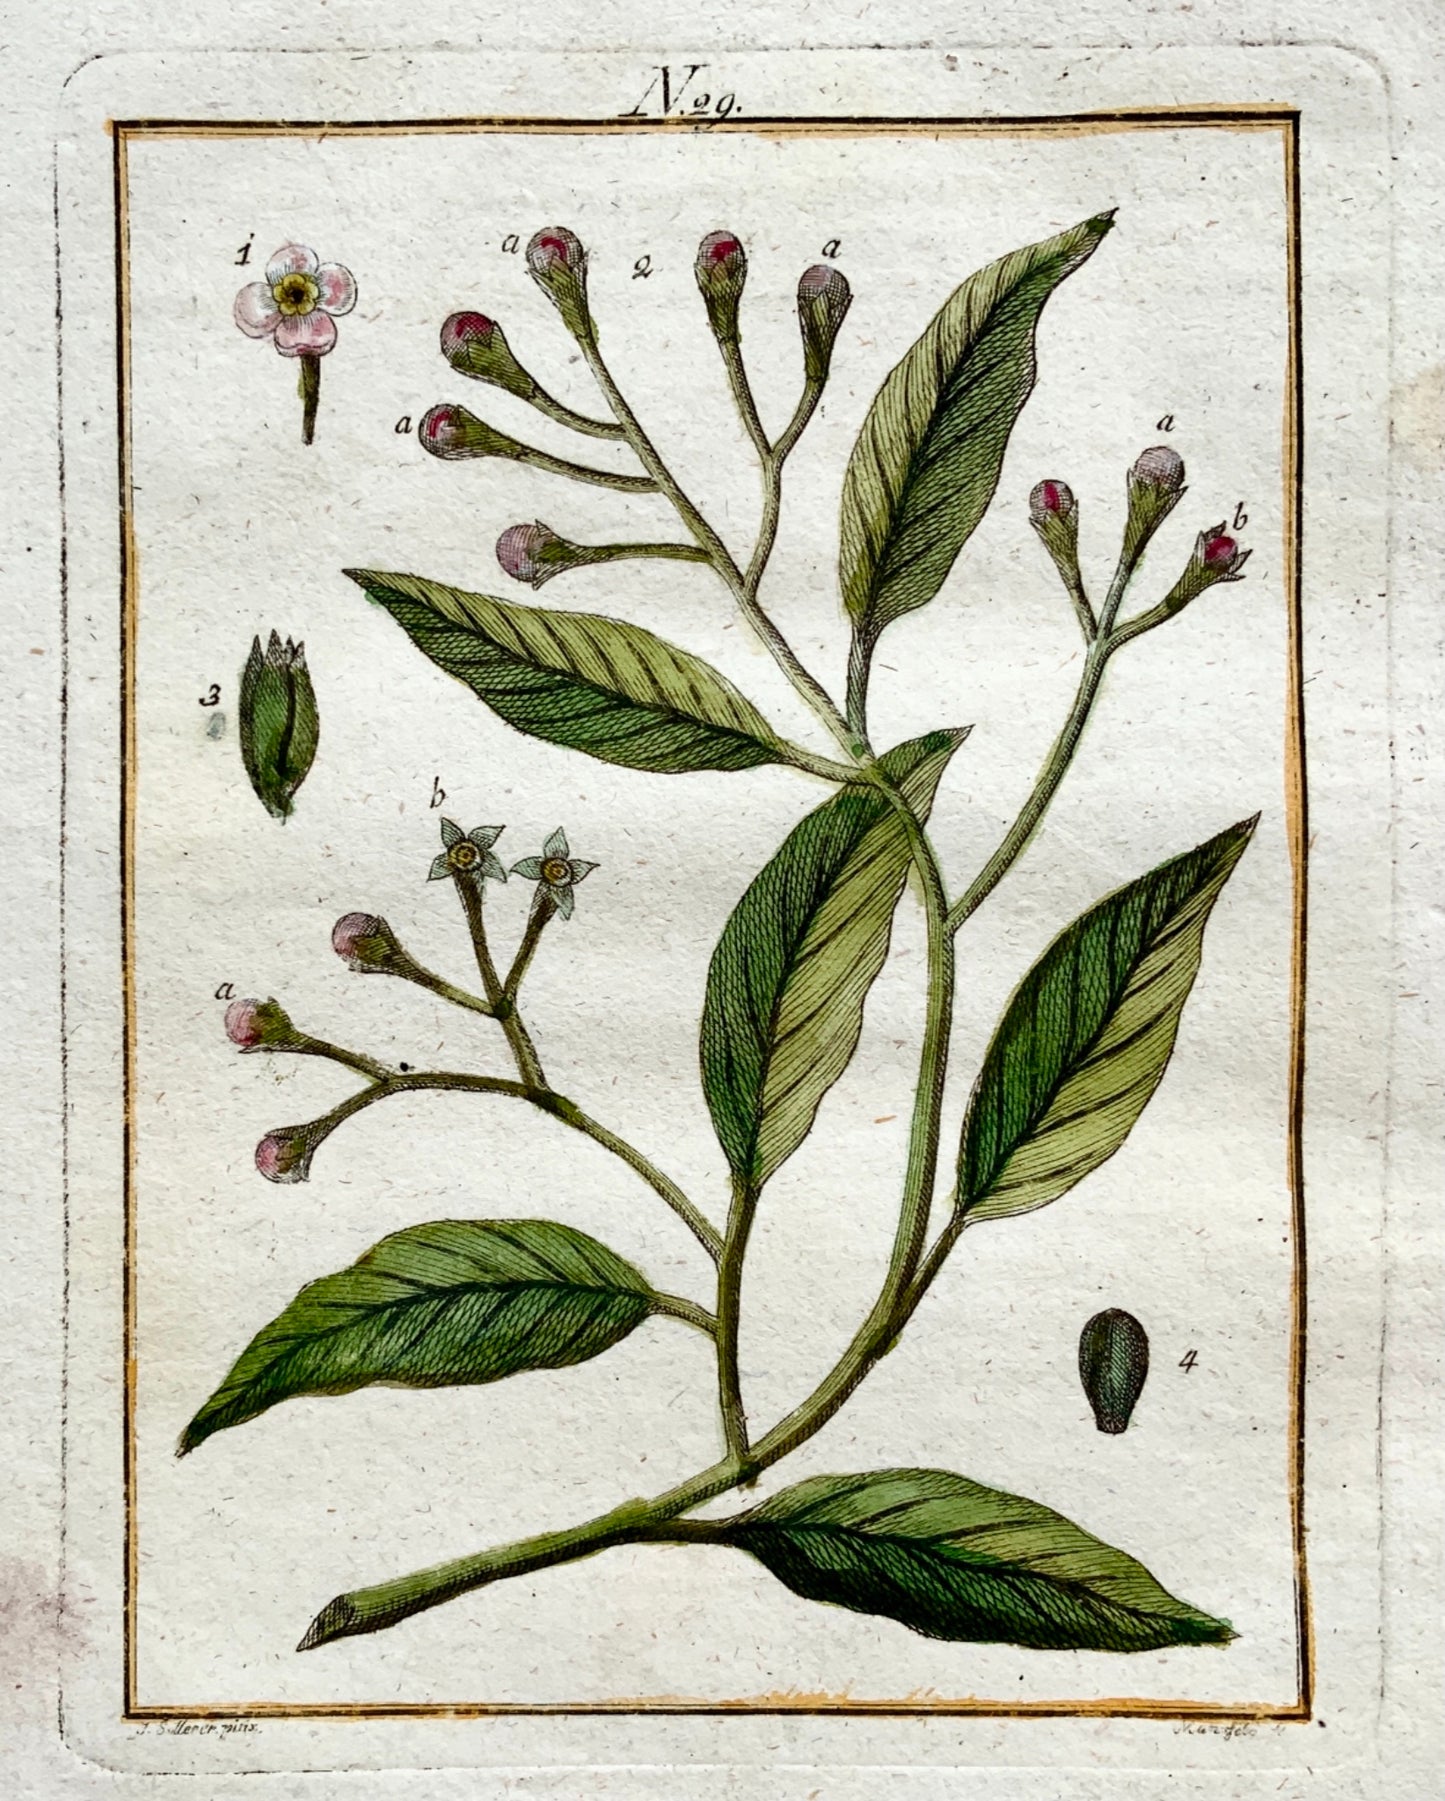 1790 CLOVE - Joh. Sollerer hand coloured engraving - Botany, Spices